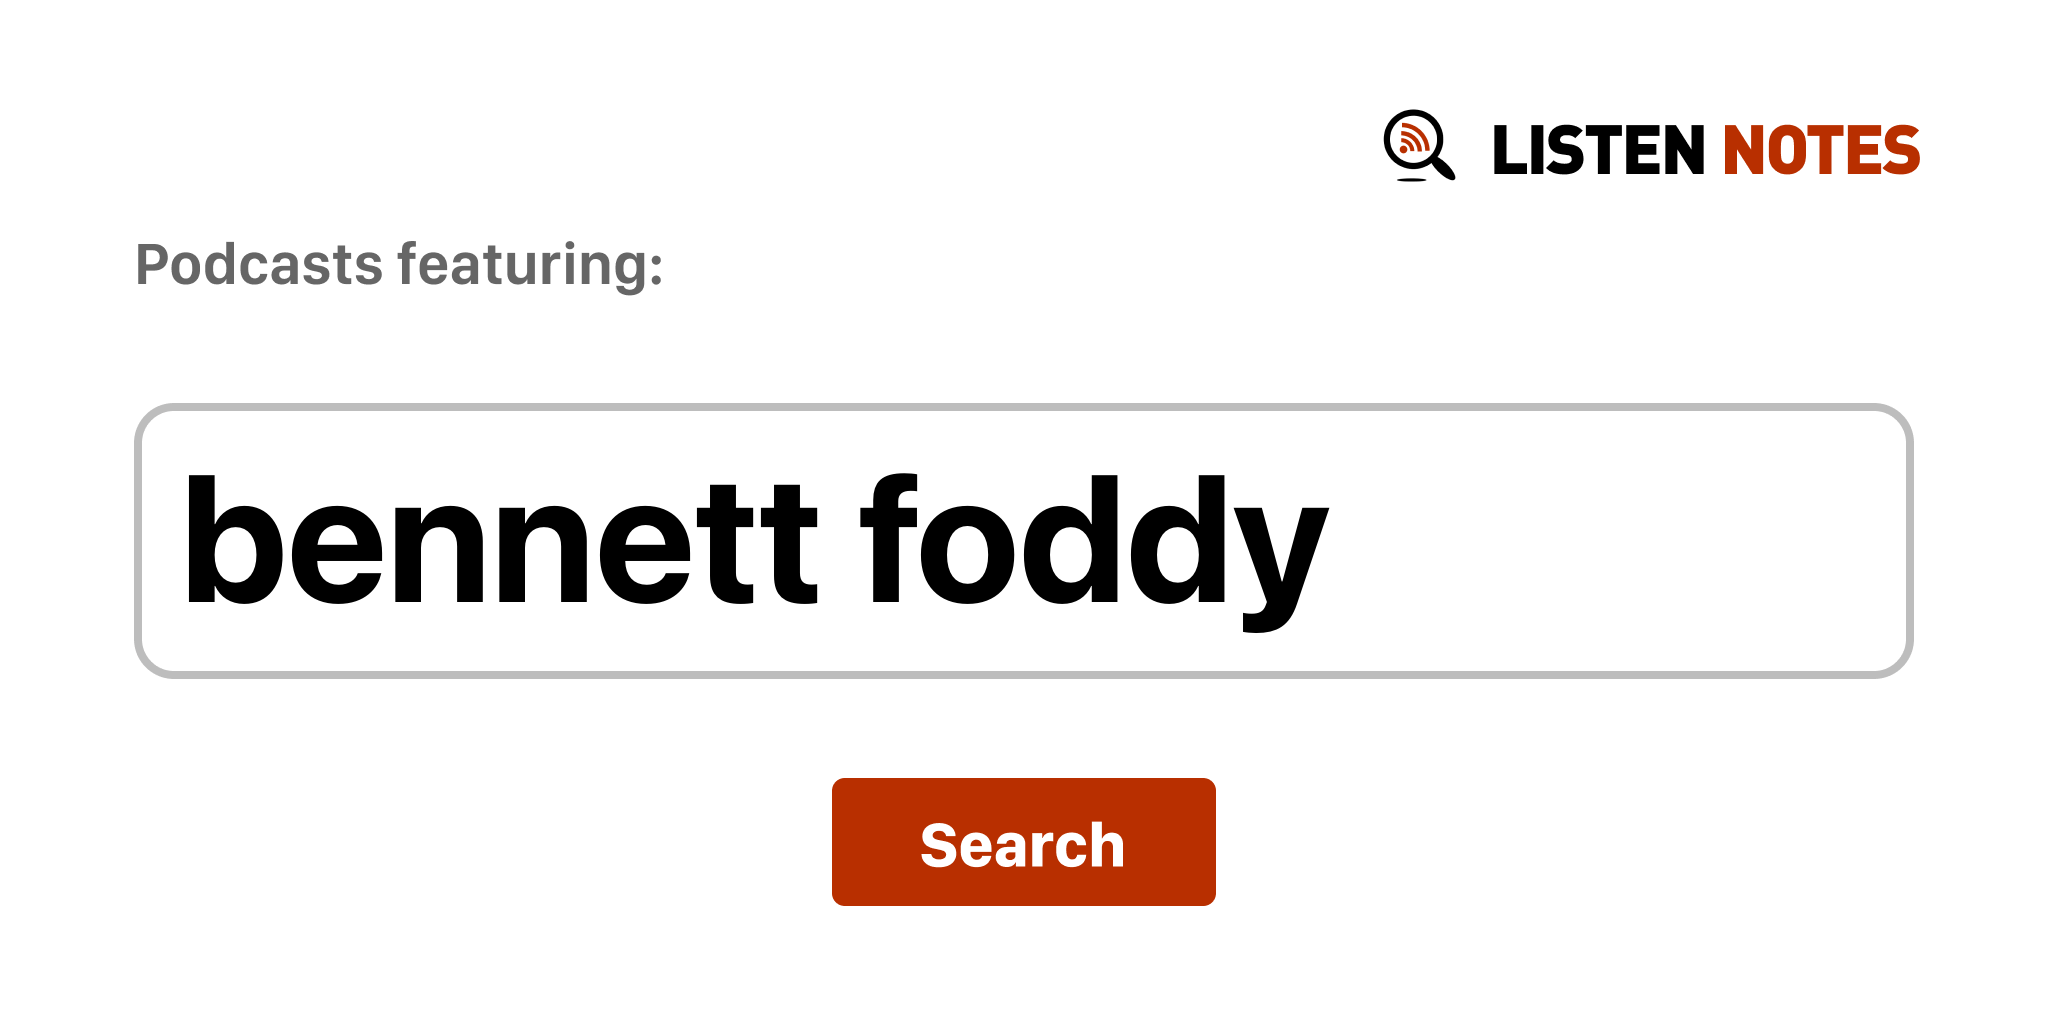 Bennett Foddy - Wikipedia